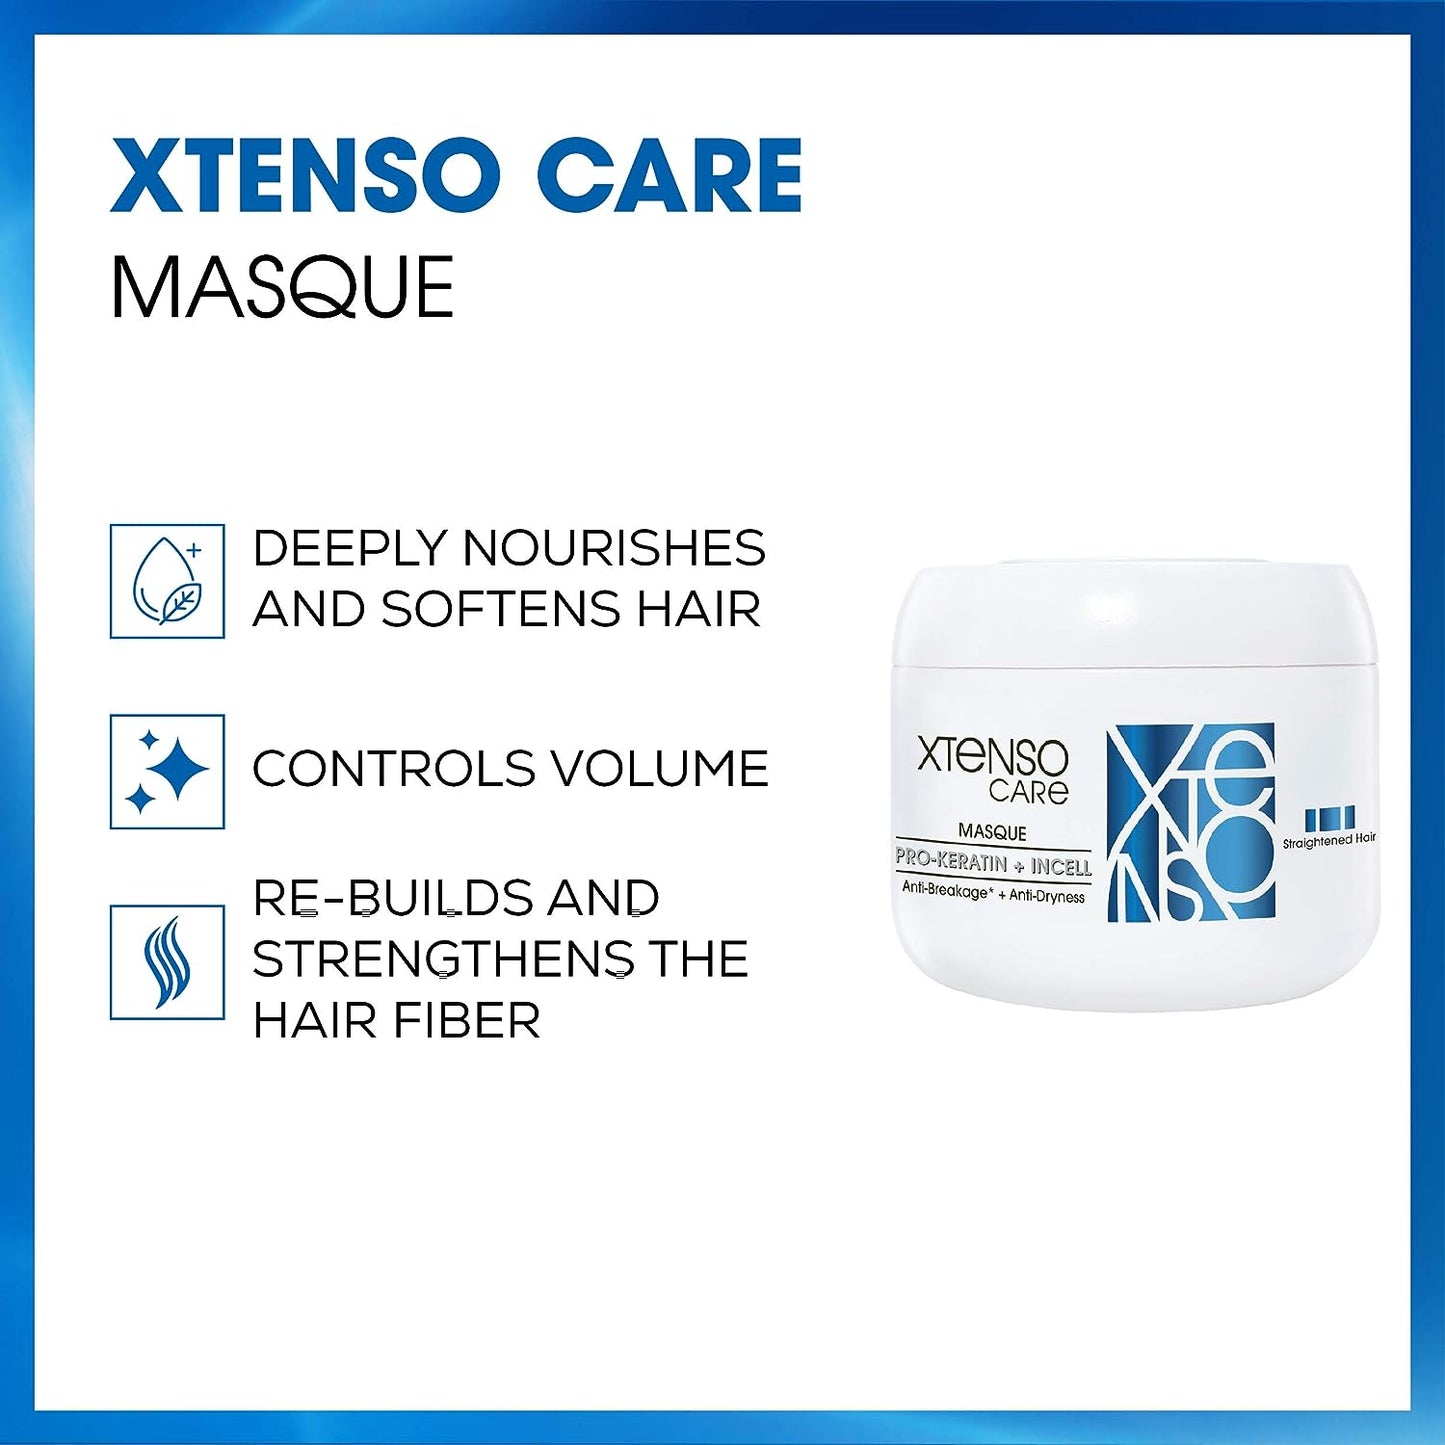 L'Oréal Professionnel Xtenso Care Shampoo + Mask  (250ml + 196gm )